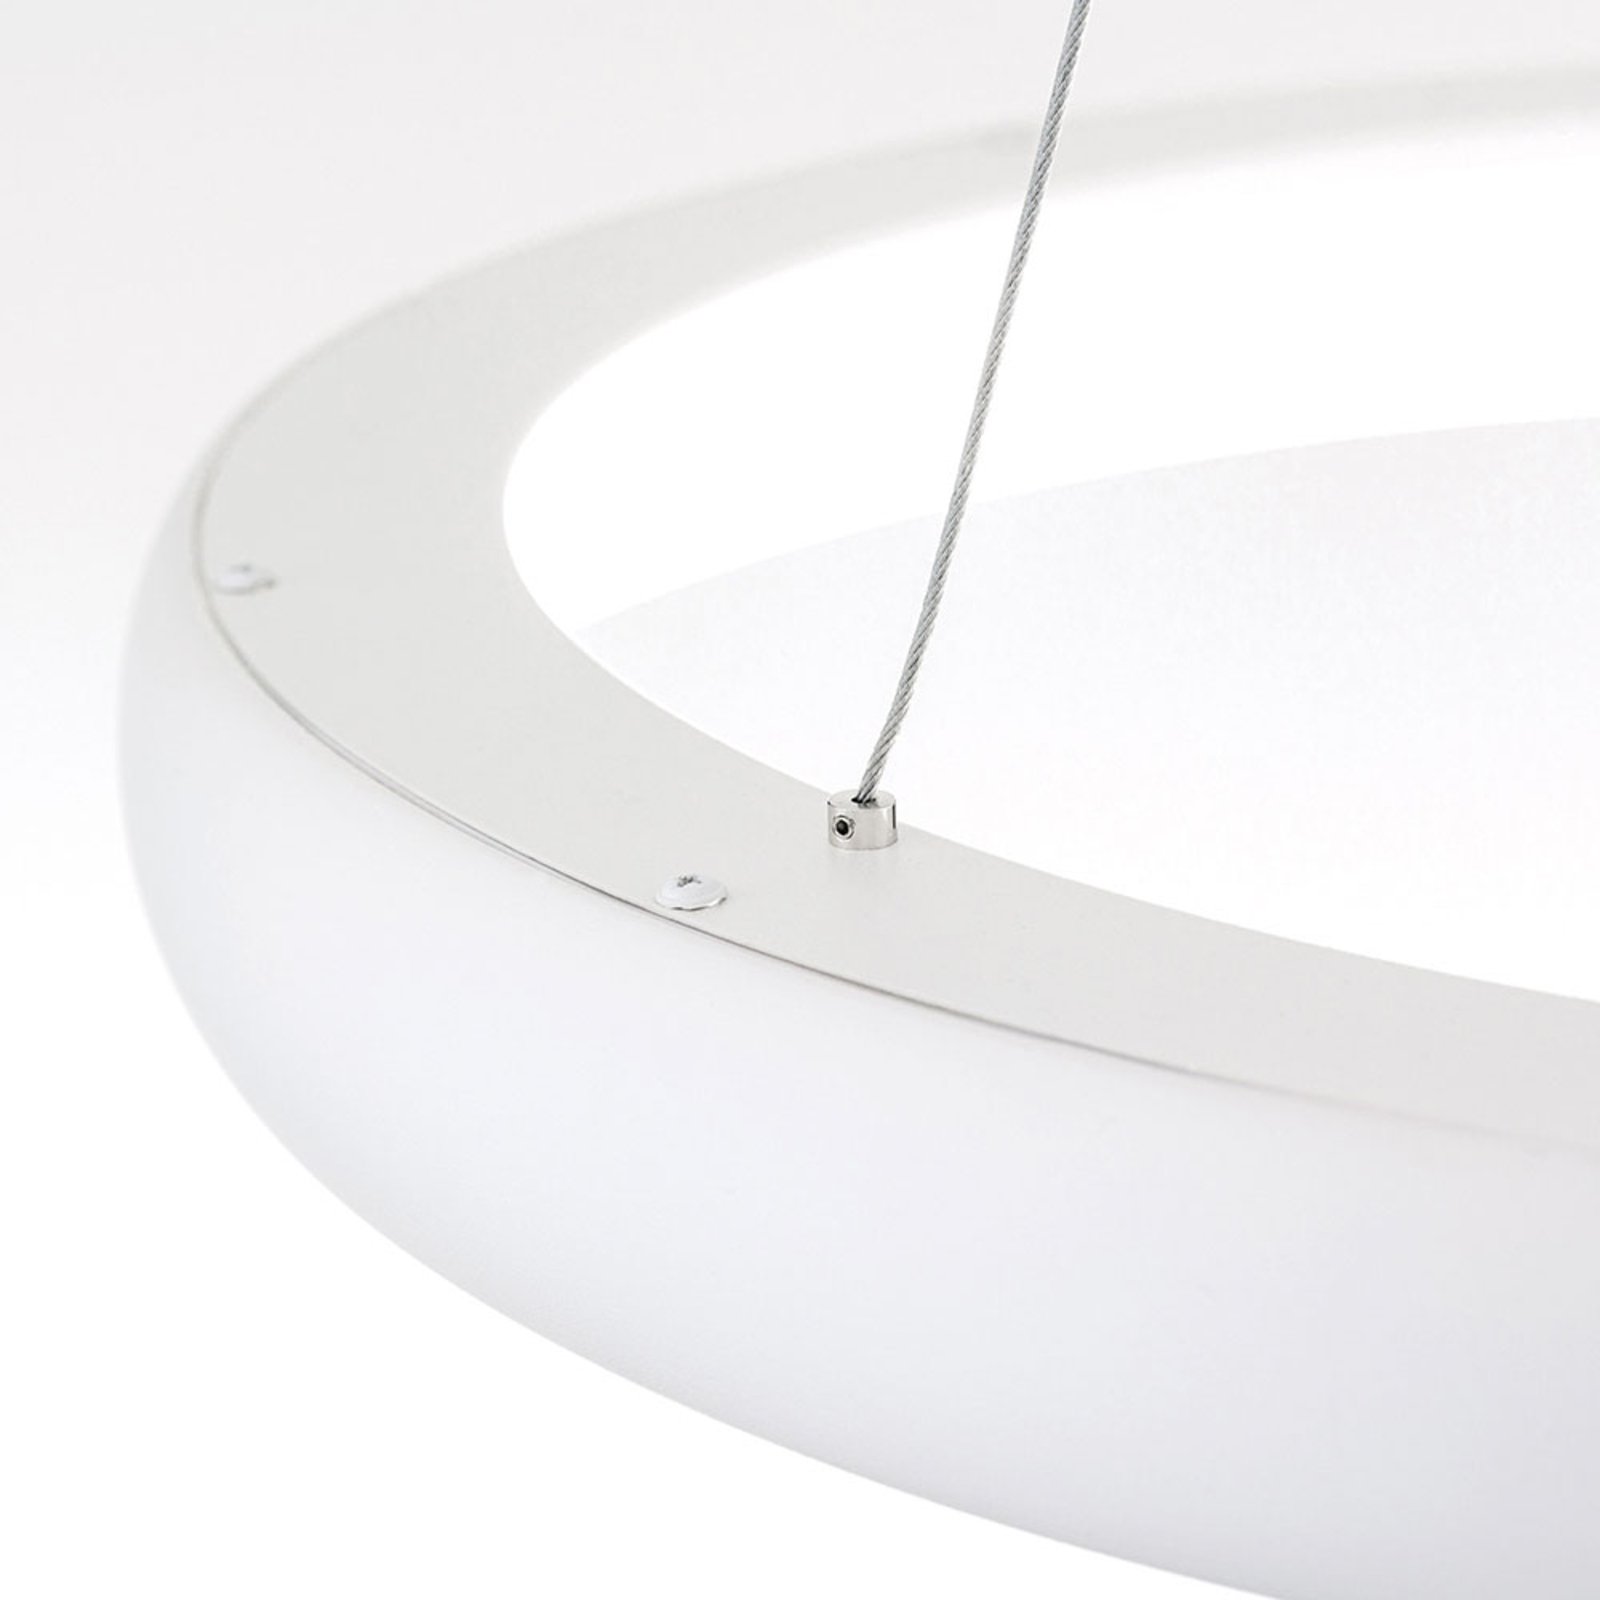 LED hanglamp Venus in ringvorm